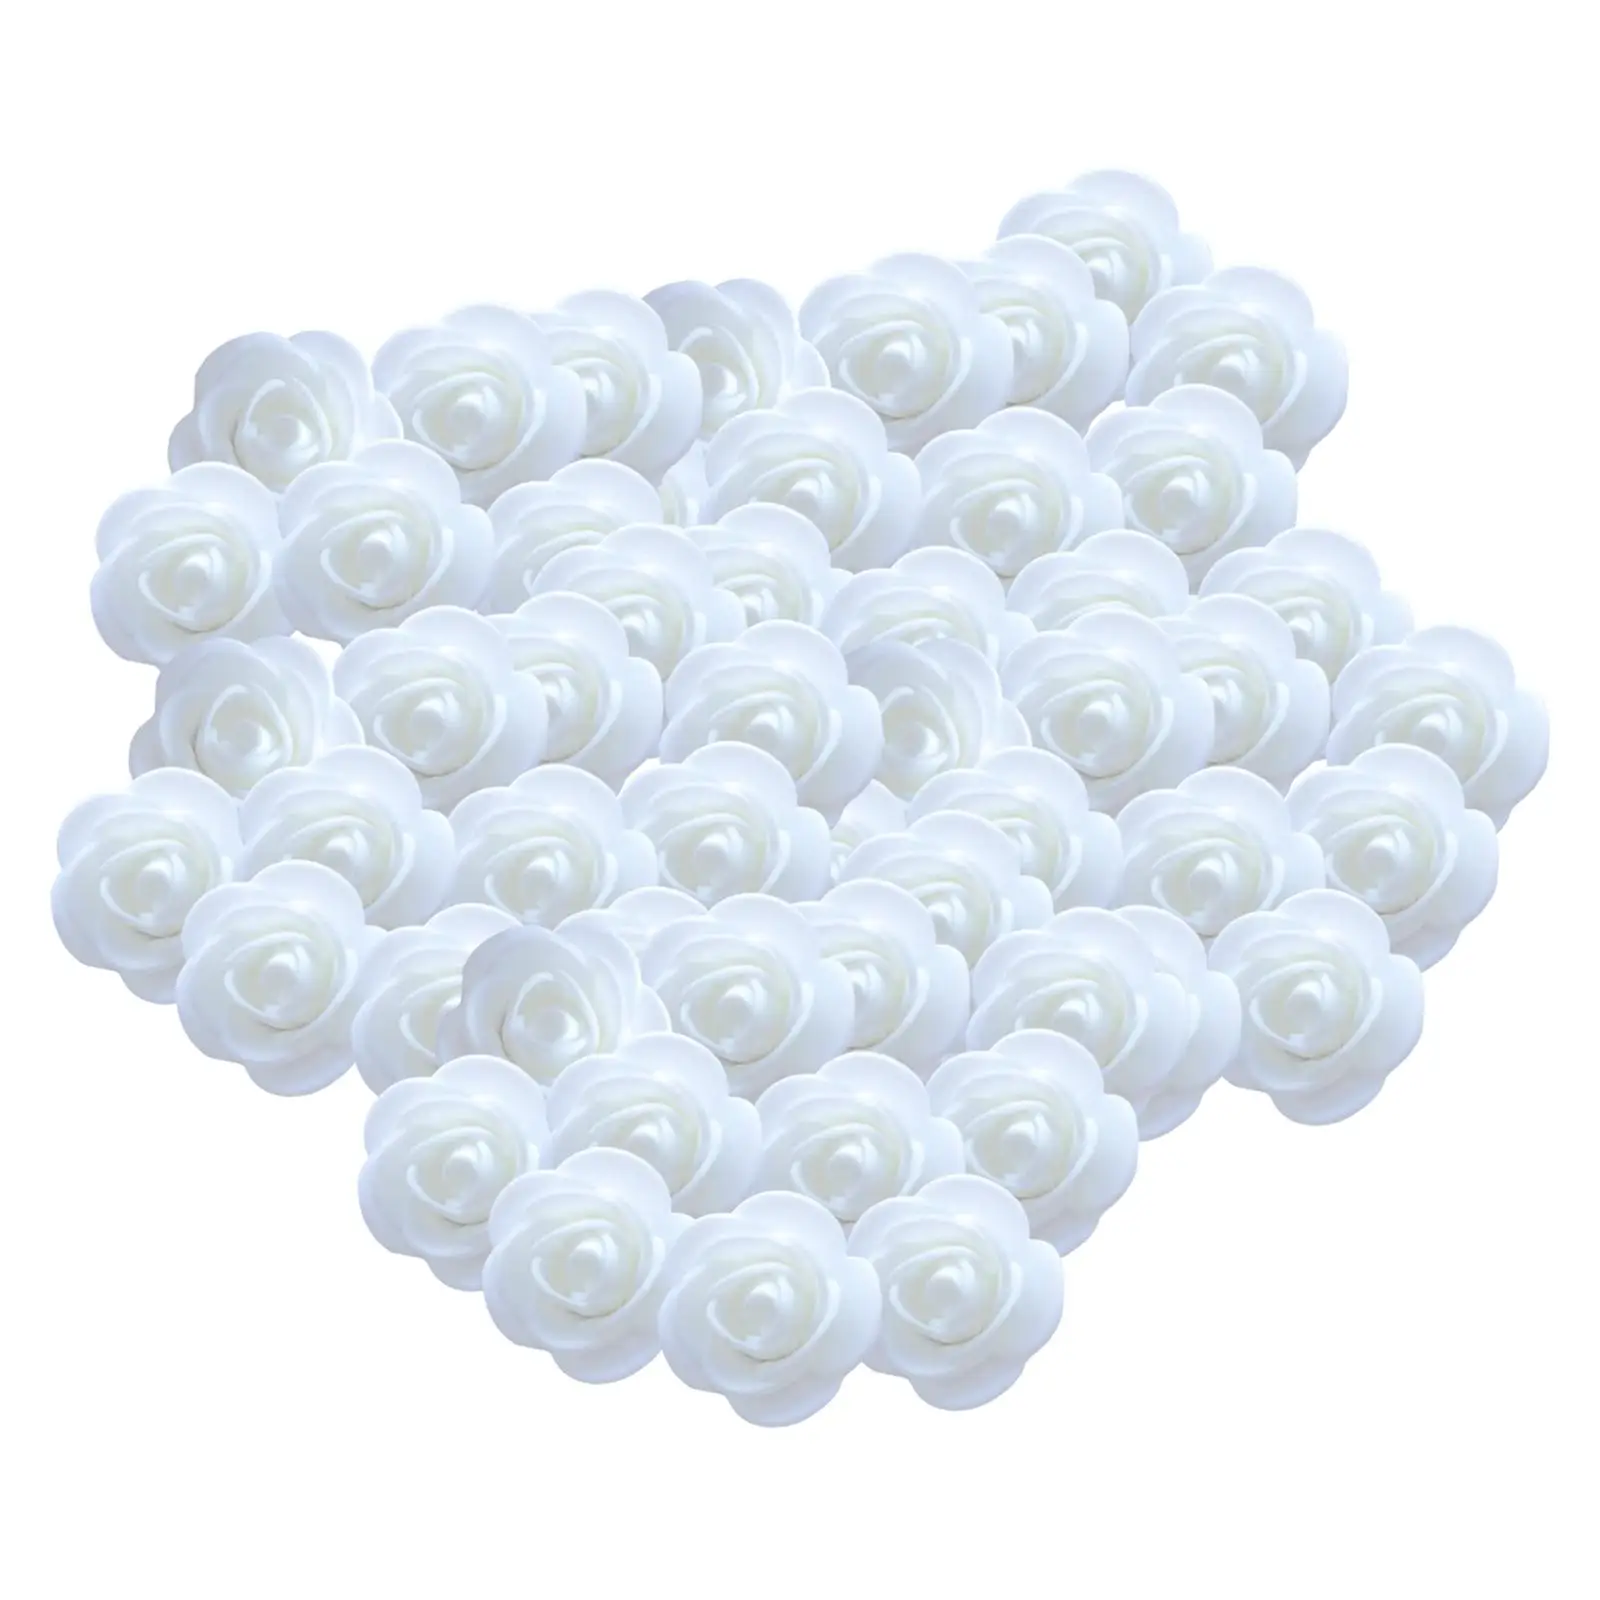 500 Pieces Mini Artificial Rose Heads Flower Arrangement for Wedding DIY Crafts Home Table Decor